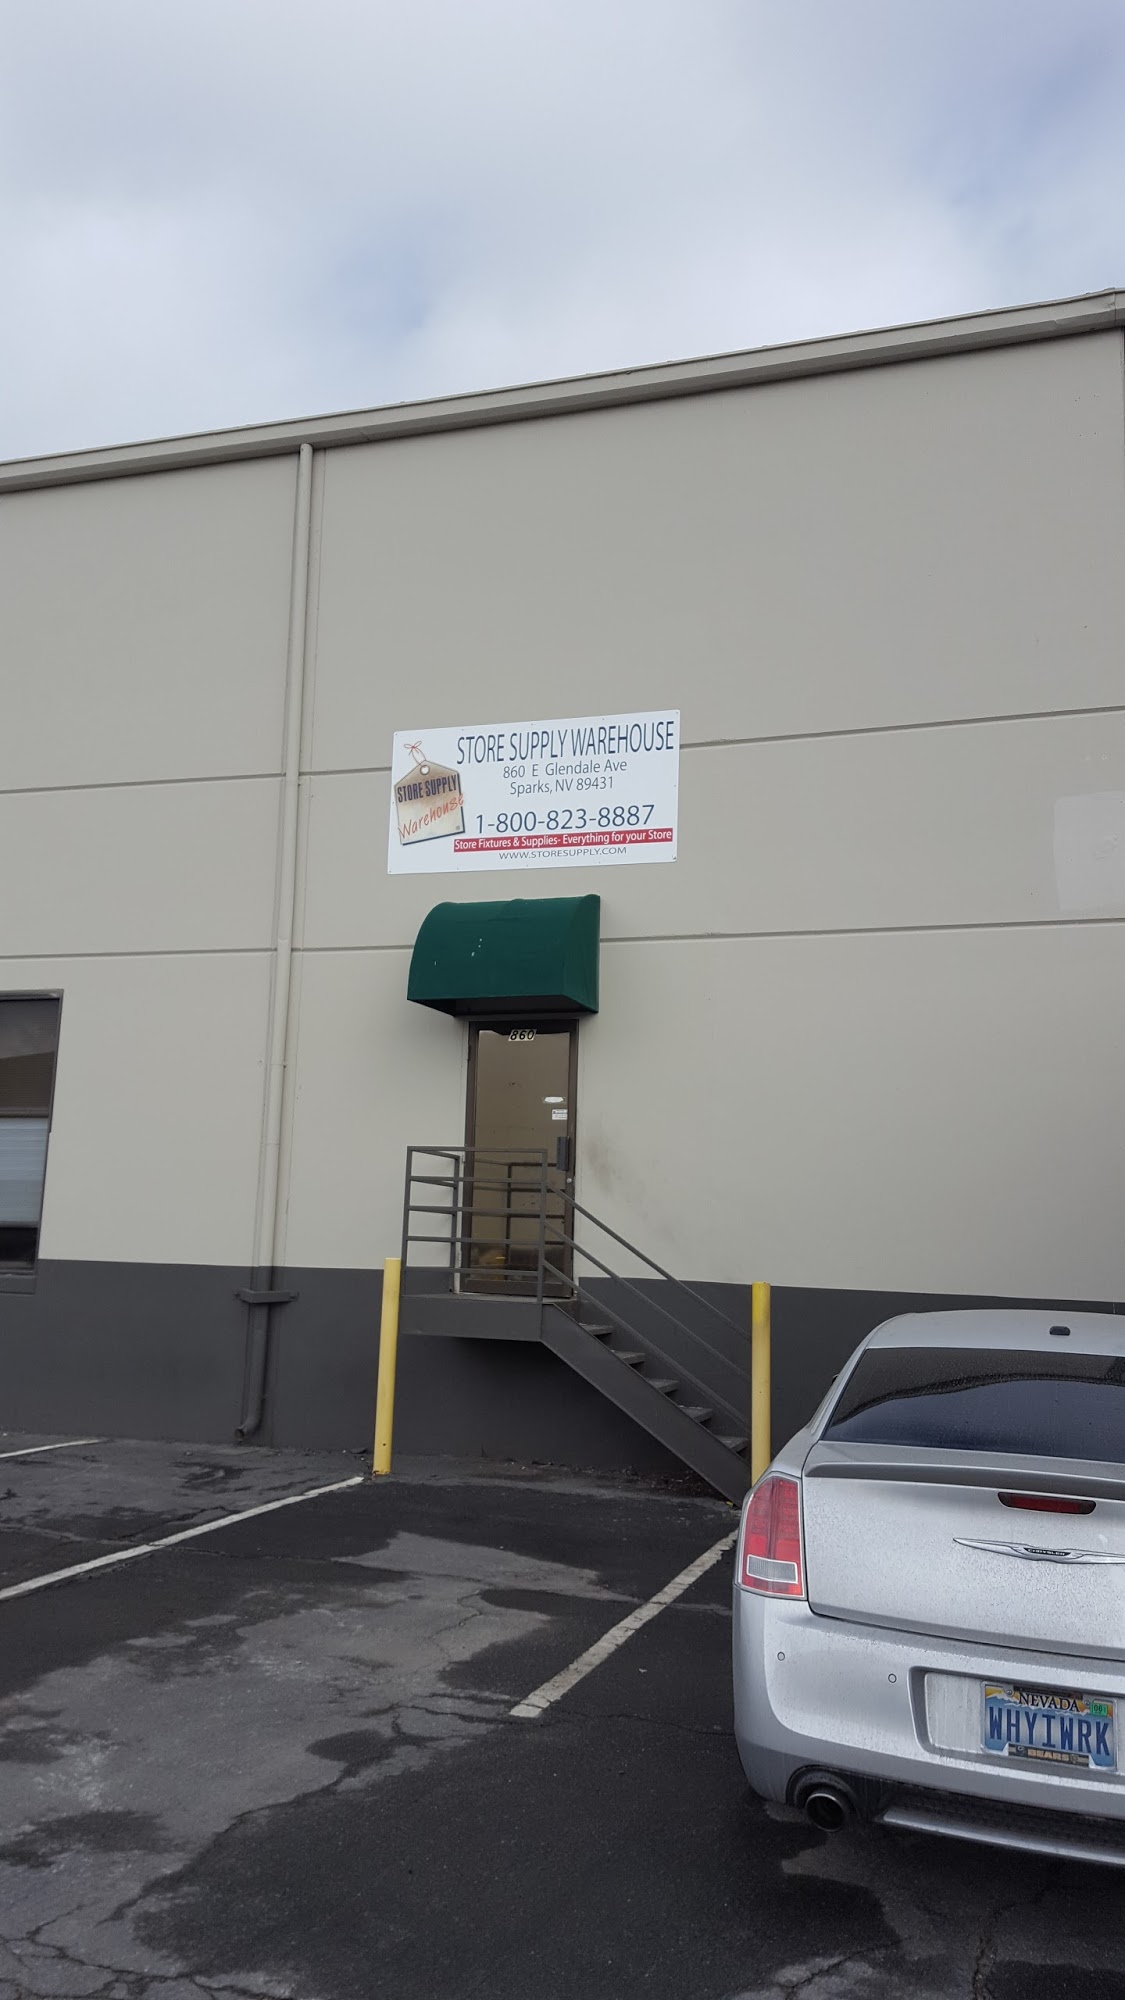 Store Supply Warehouse, LLC